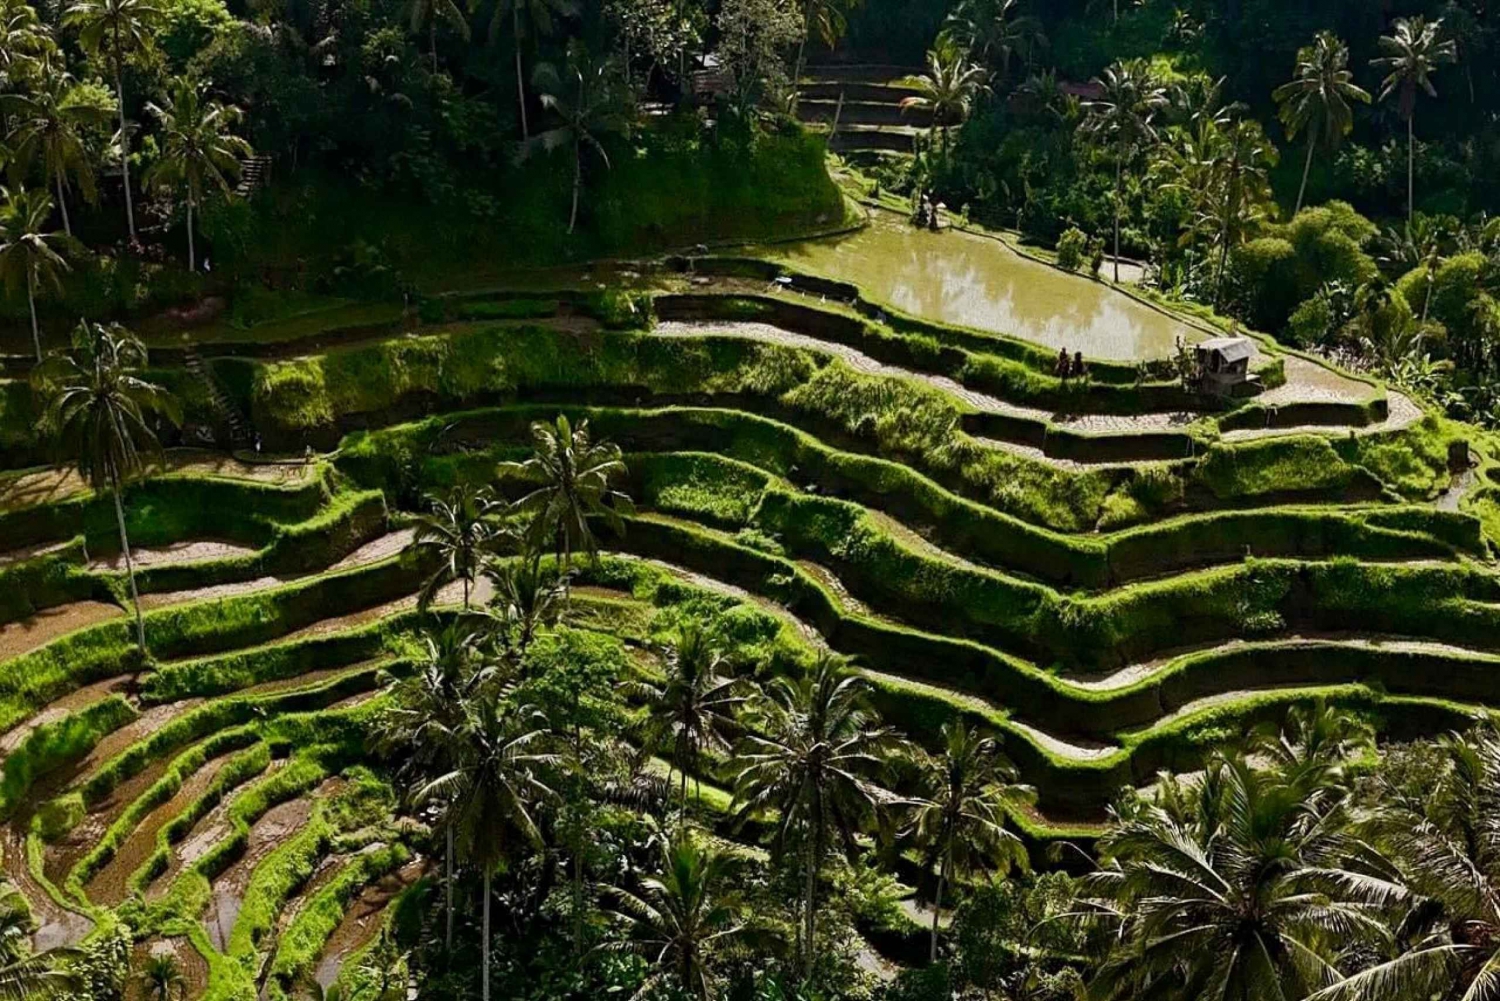 Ubud: Rice Terrace, Waterfall, Water Temple & More